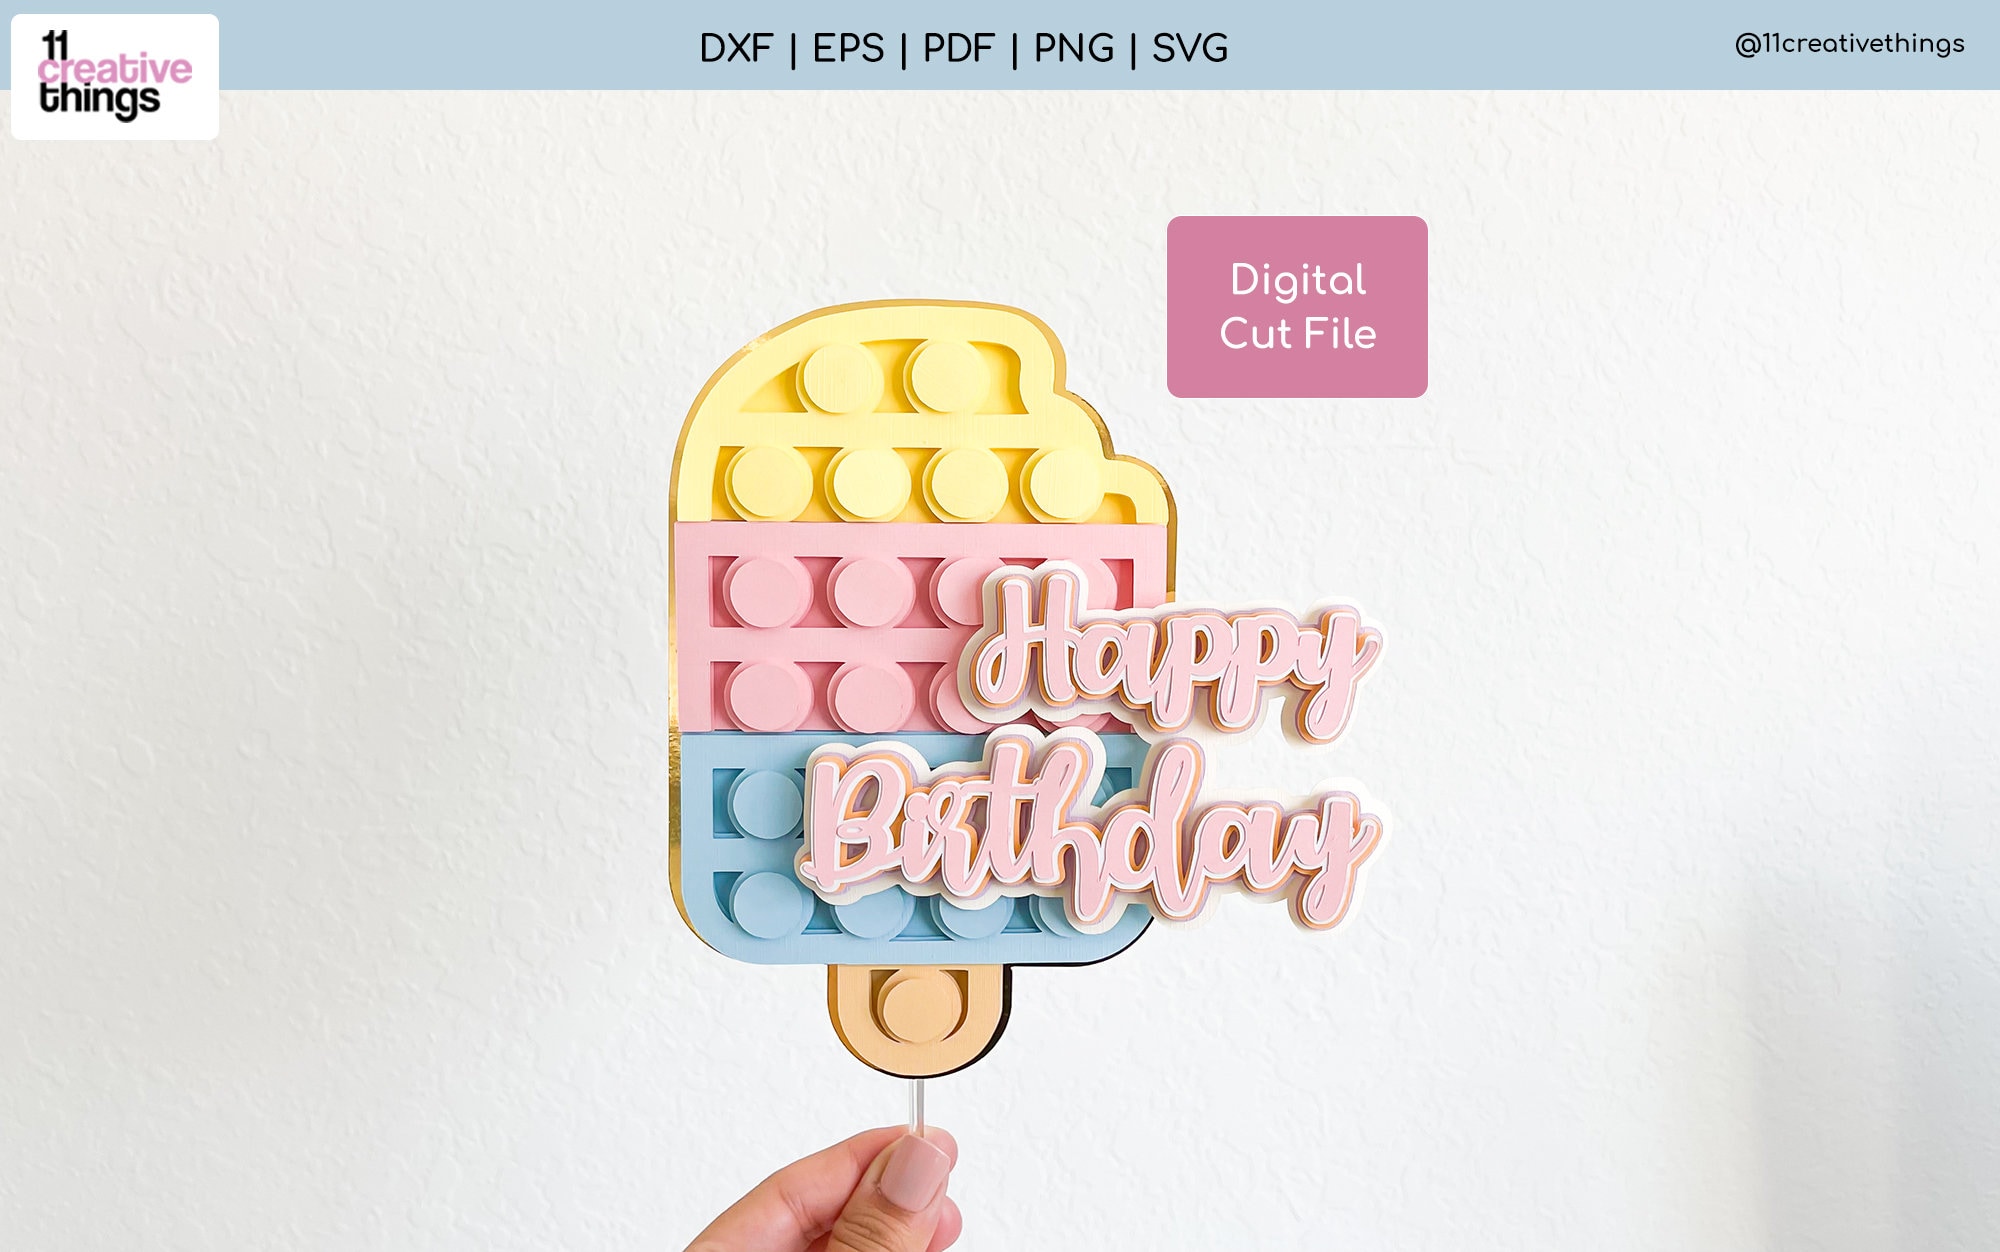 12 Ice-cream Paddle Pop Popsicle Fondant Edible Cupcake 